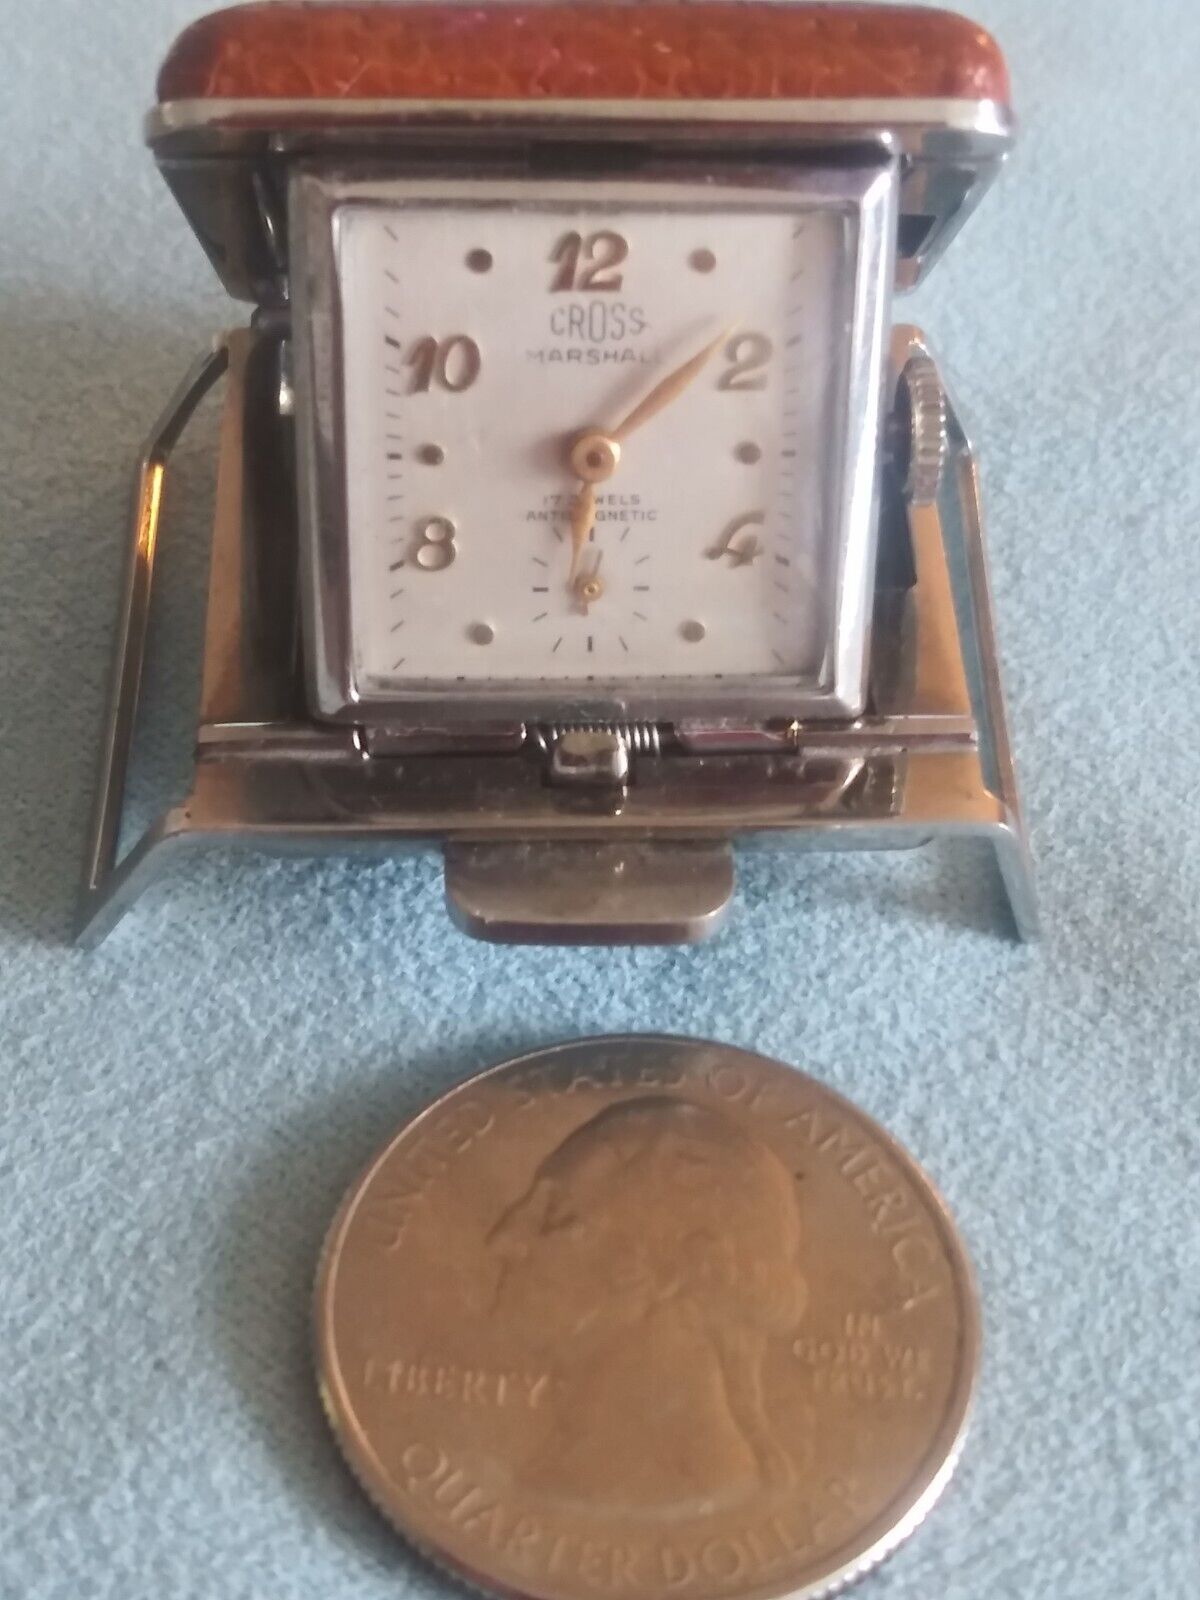 Miniature Vintage Cross-marshall Golf Handwind Watch. Very Rare.